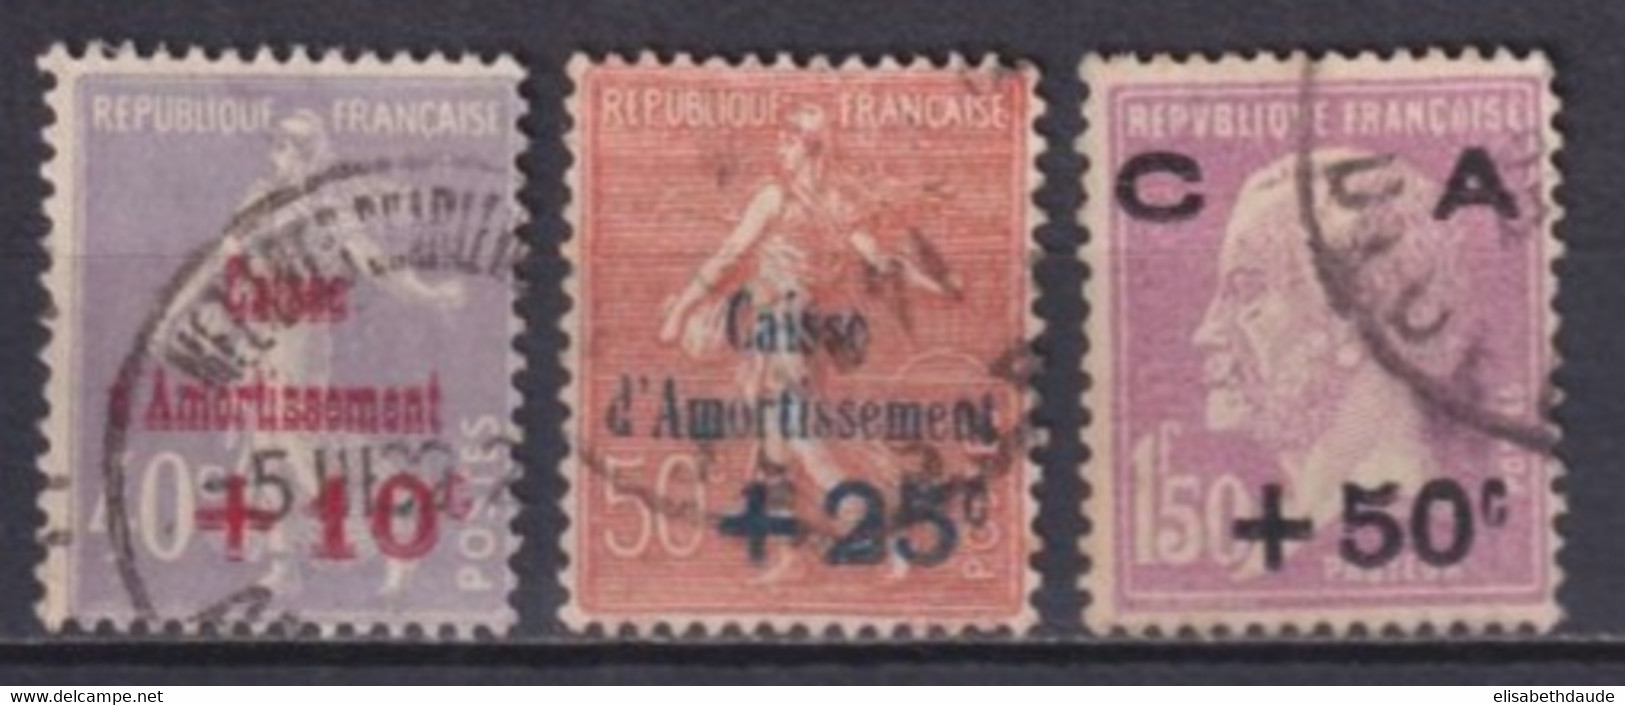 1928 - SERIE COMPLETE YVERT N° 248/250 OBLITERES !  - COTE = 85 EUR. - CAISSE AMORTISSEMENT - 1927-31 Sinking Fund